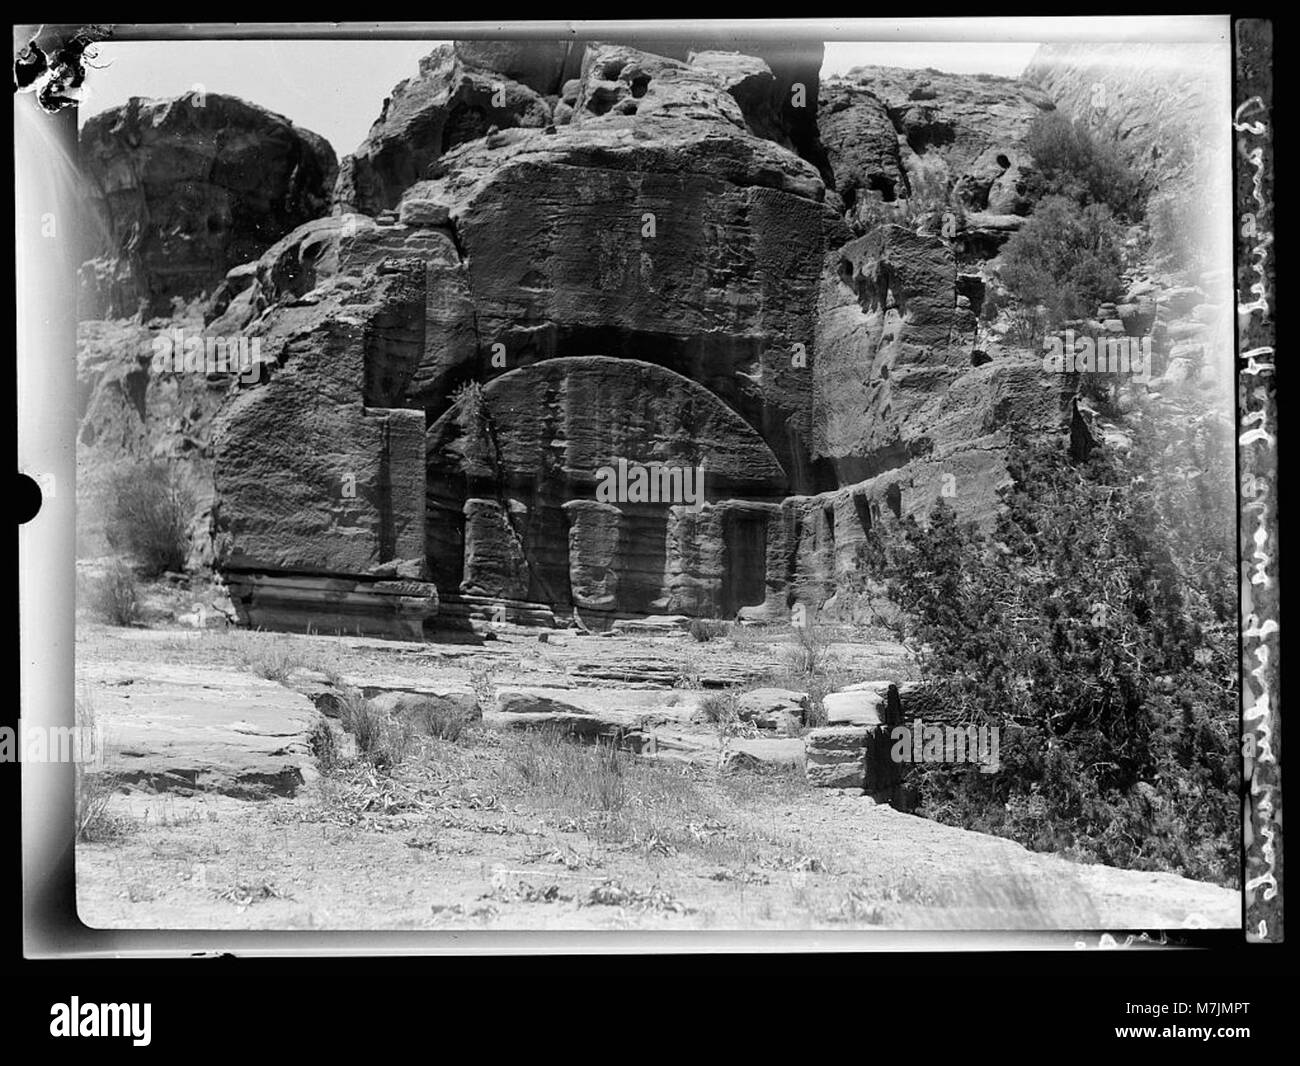 Petra. El-Farasah & obelisco zona di colmo. Sala romana, Wadi Farasah. Talee di roccia per ricevere la muratura vaults matpc LOC.16290 Foto Stock